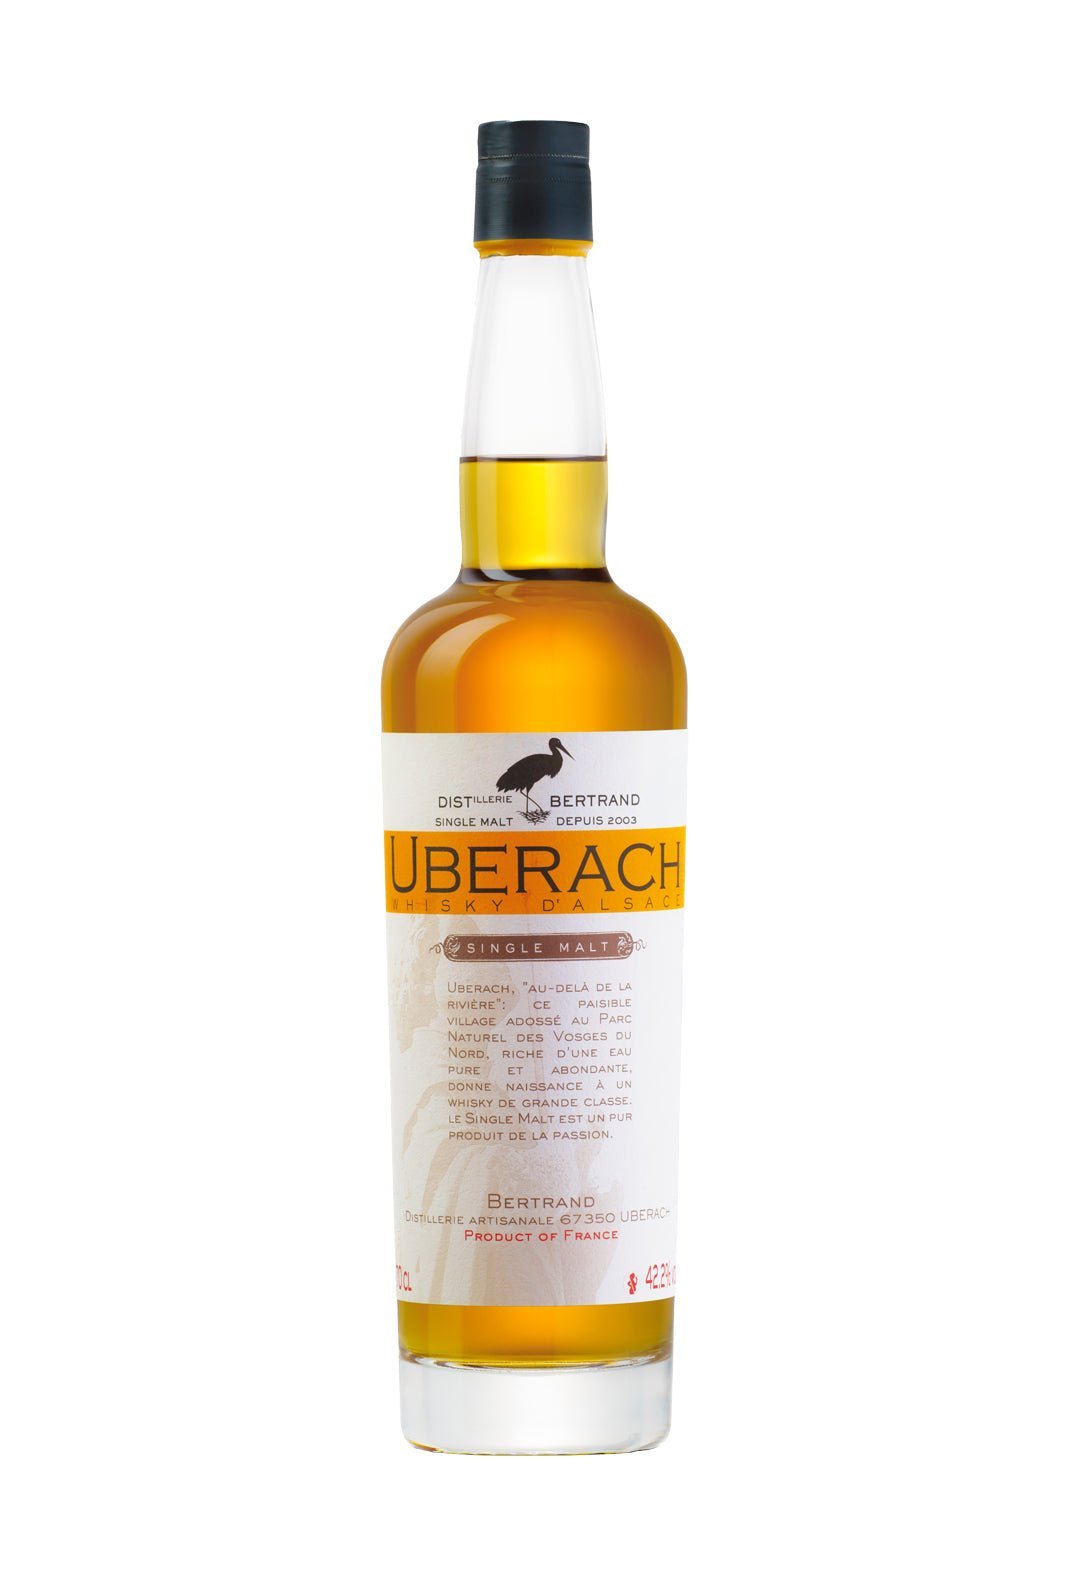 Bertrand Uberach Single Malt 5 years 42.2% 700ml | Whiskey | Shop online at Spirits of France